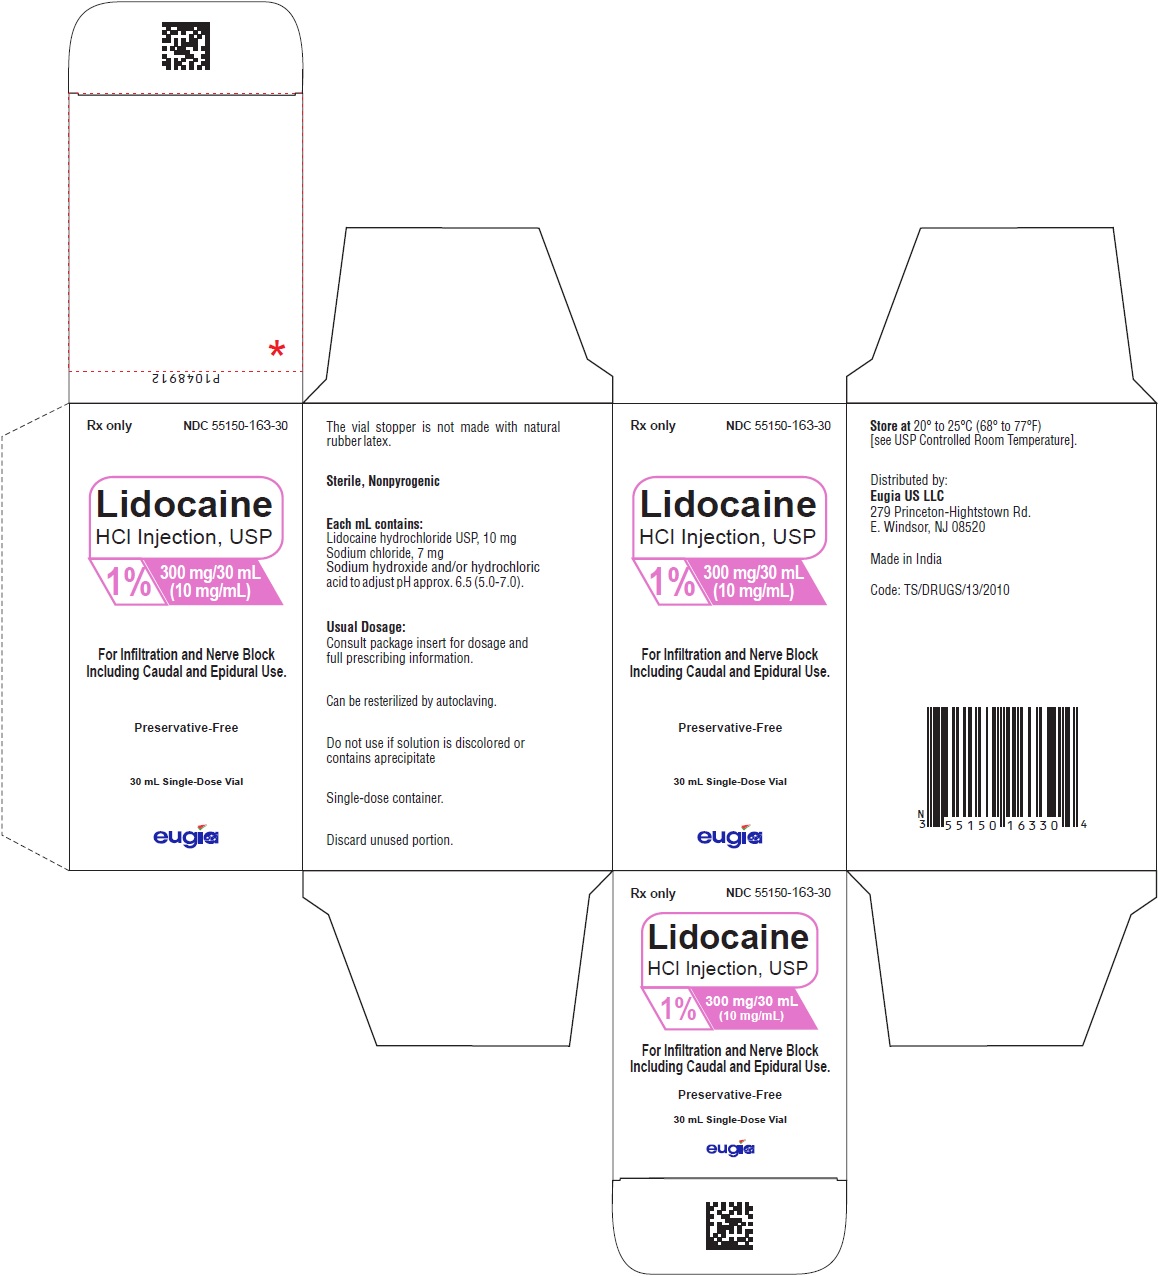 PACKAGE LABEL-PRINCIPAL DISPLAY PANEL - 1% 300 mg/30 mL (10 mg/mL) - 30 mL Container-Carton [1 Vial]